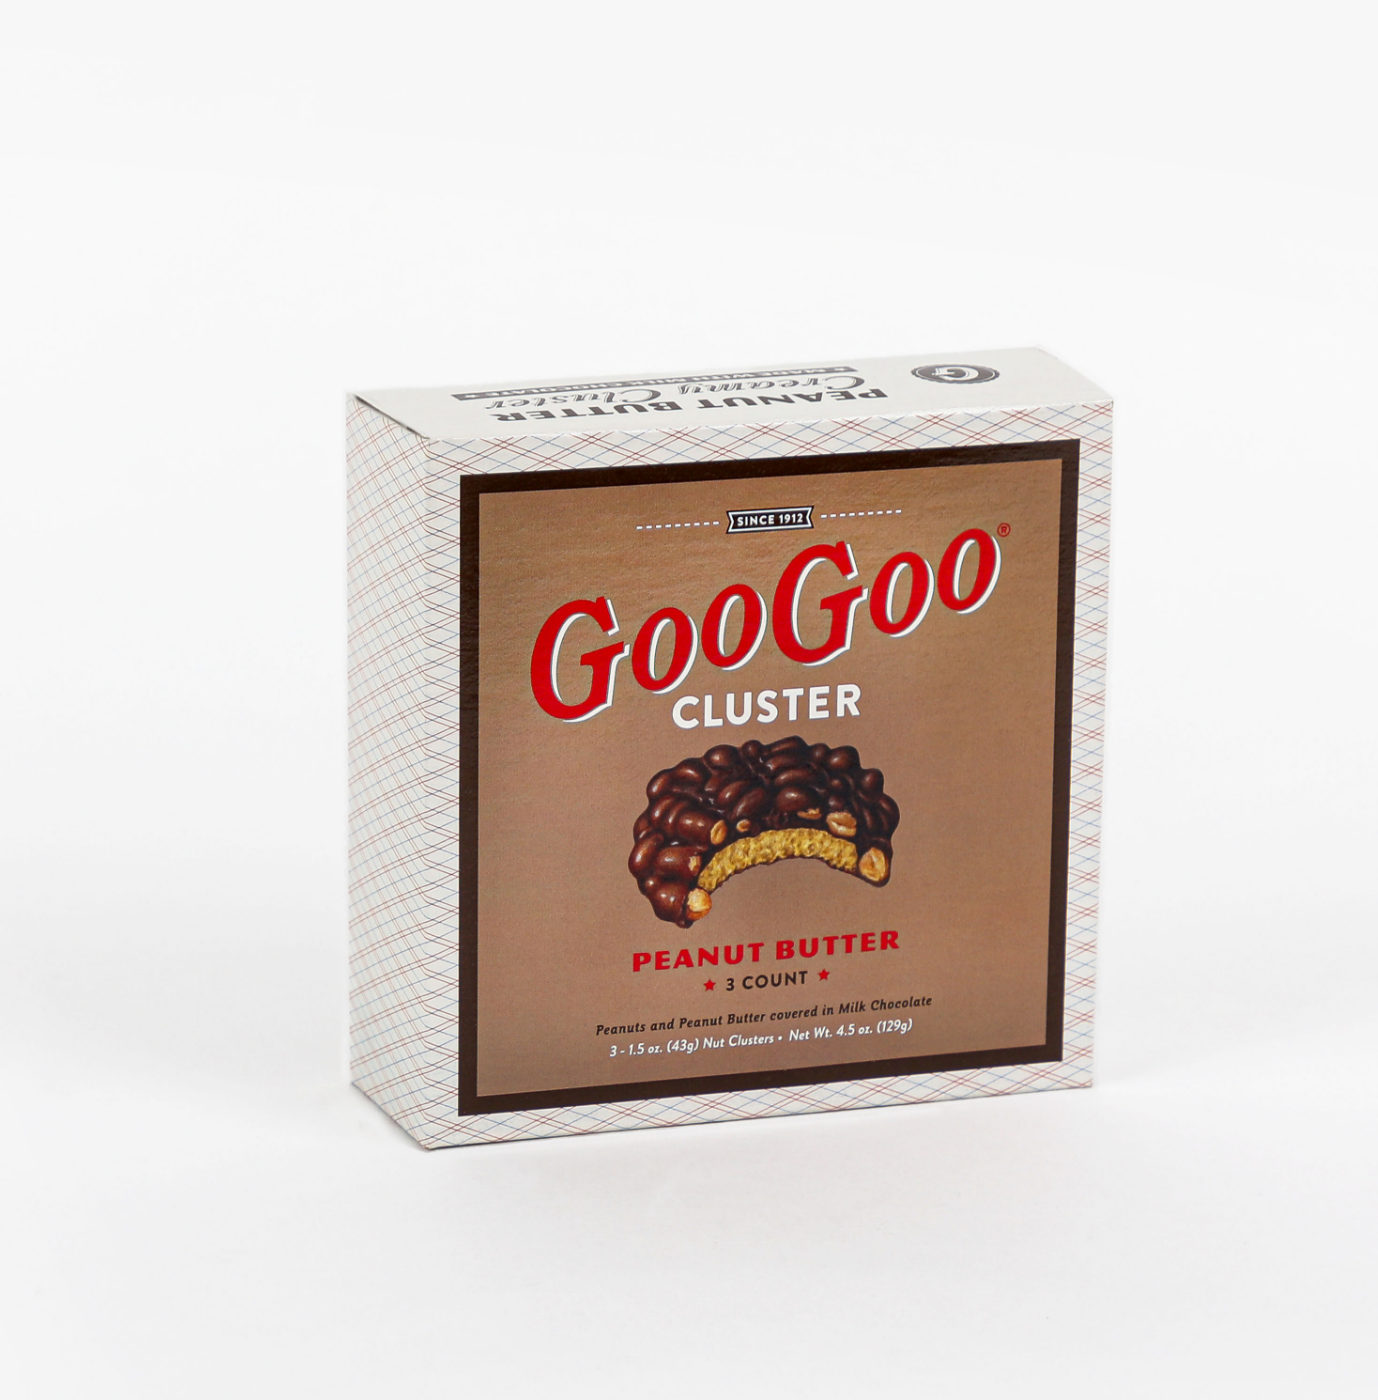 CHOCOLATE AND TREATS-Goo Goo Cluster